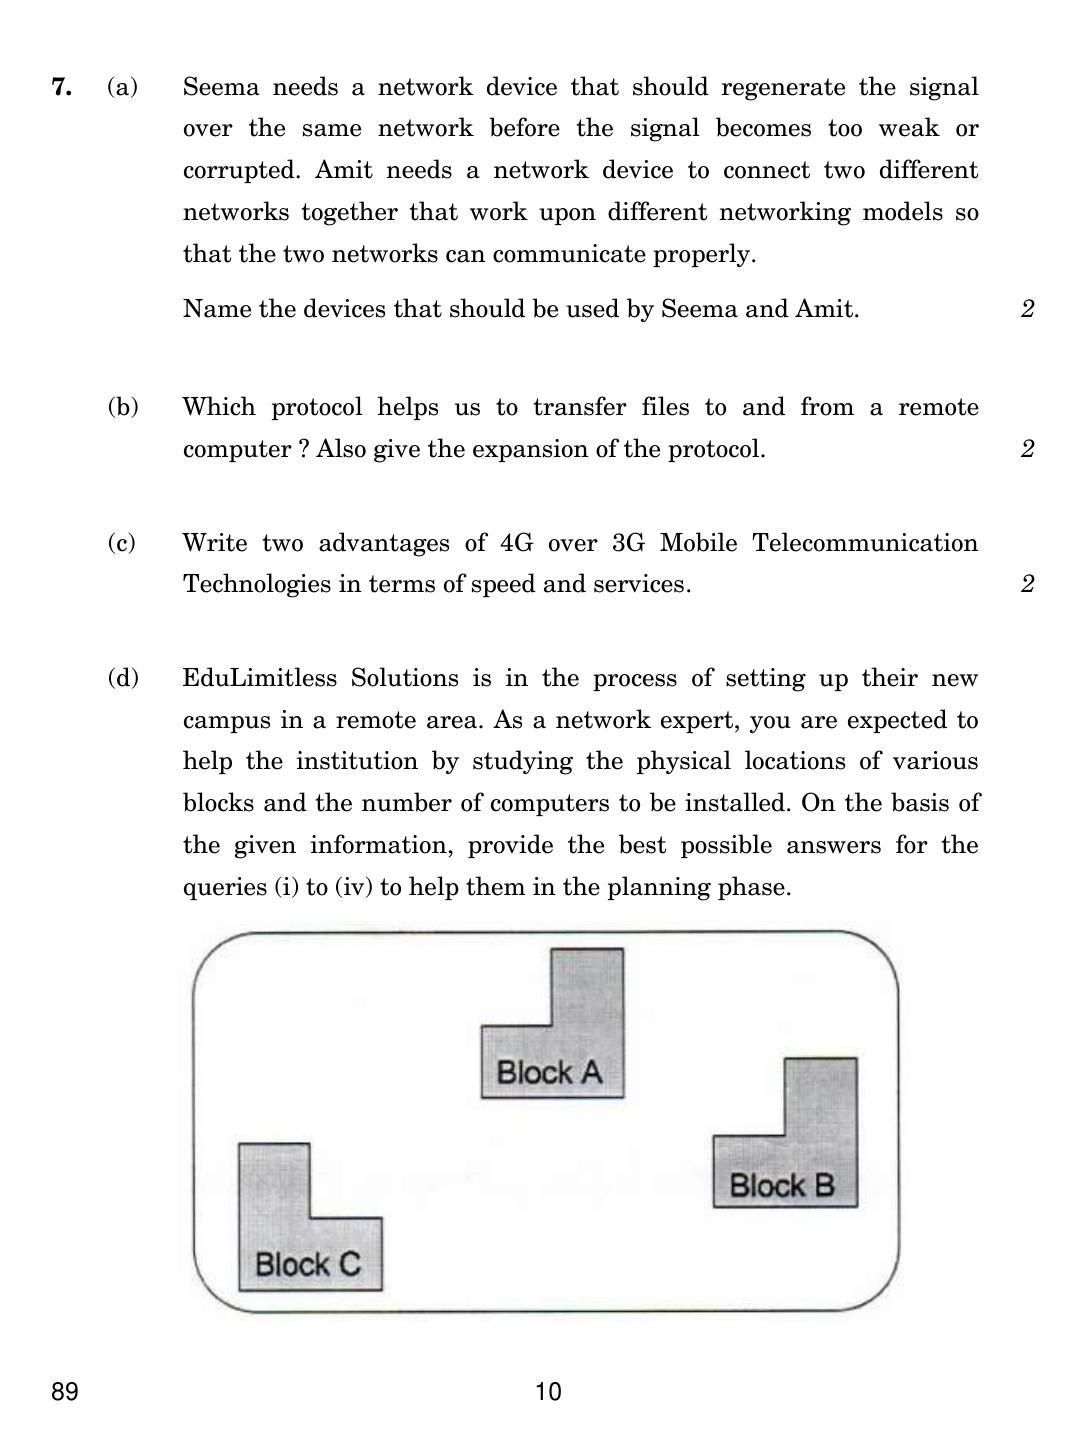 CBSE Class 12 89 MULTIMEDIA & WEB TECH. 2019 Compartment Question Paper - Page 10